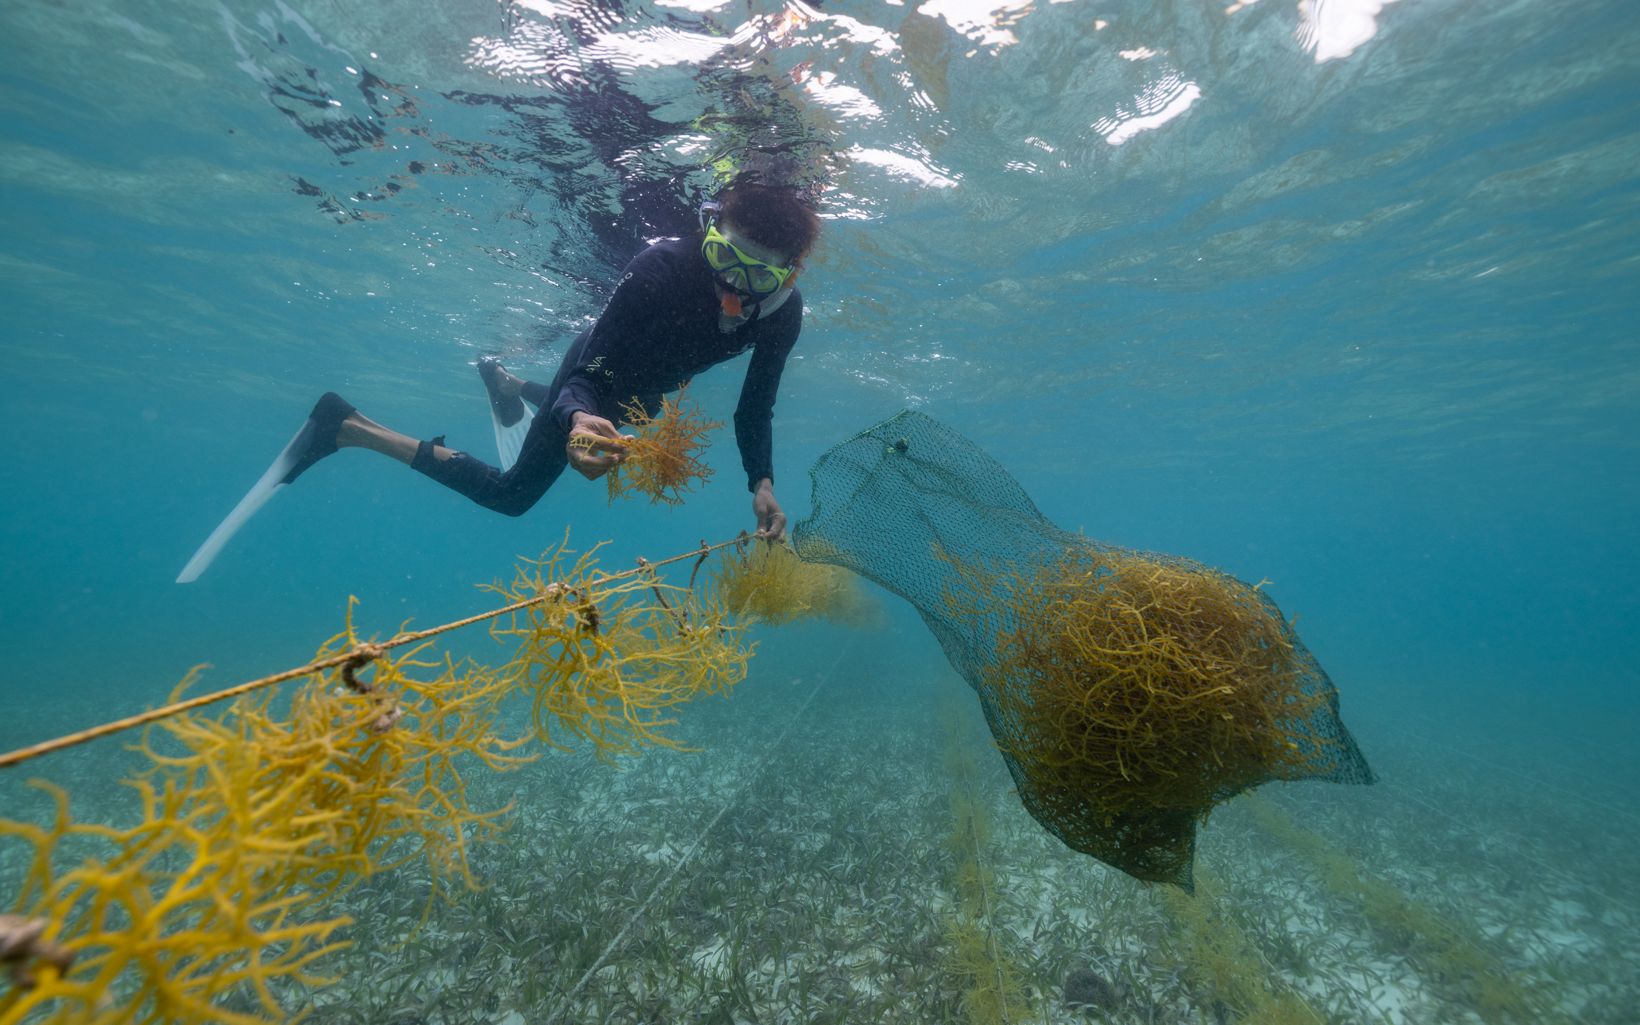 Mariko Wallen dives with seaweed in a net.